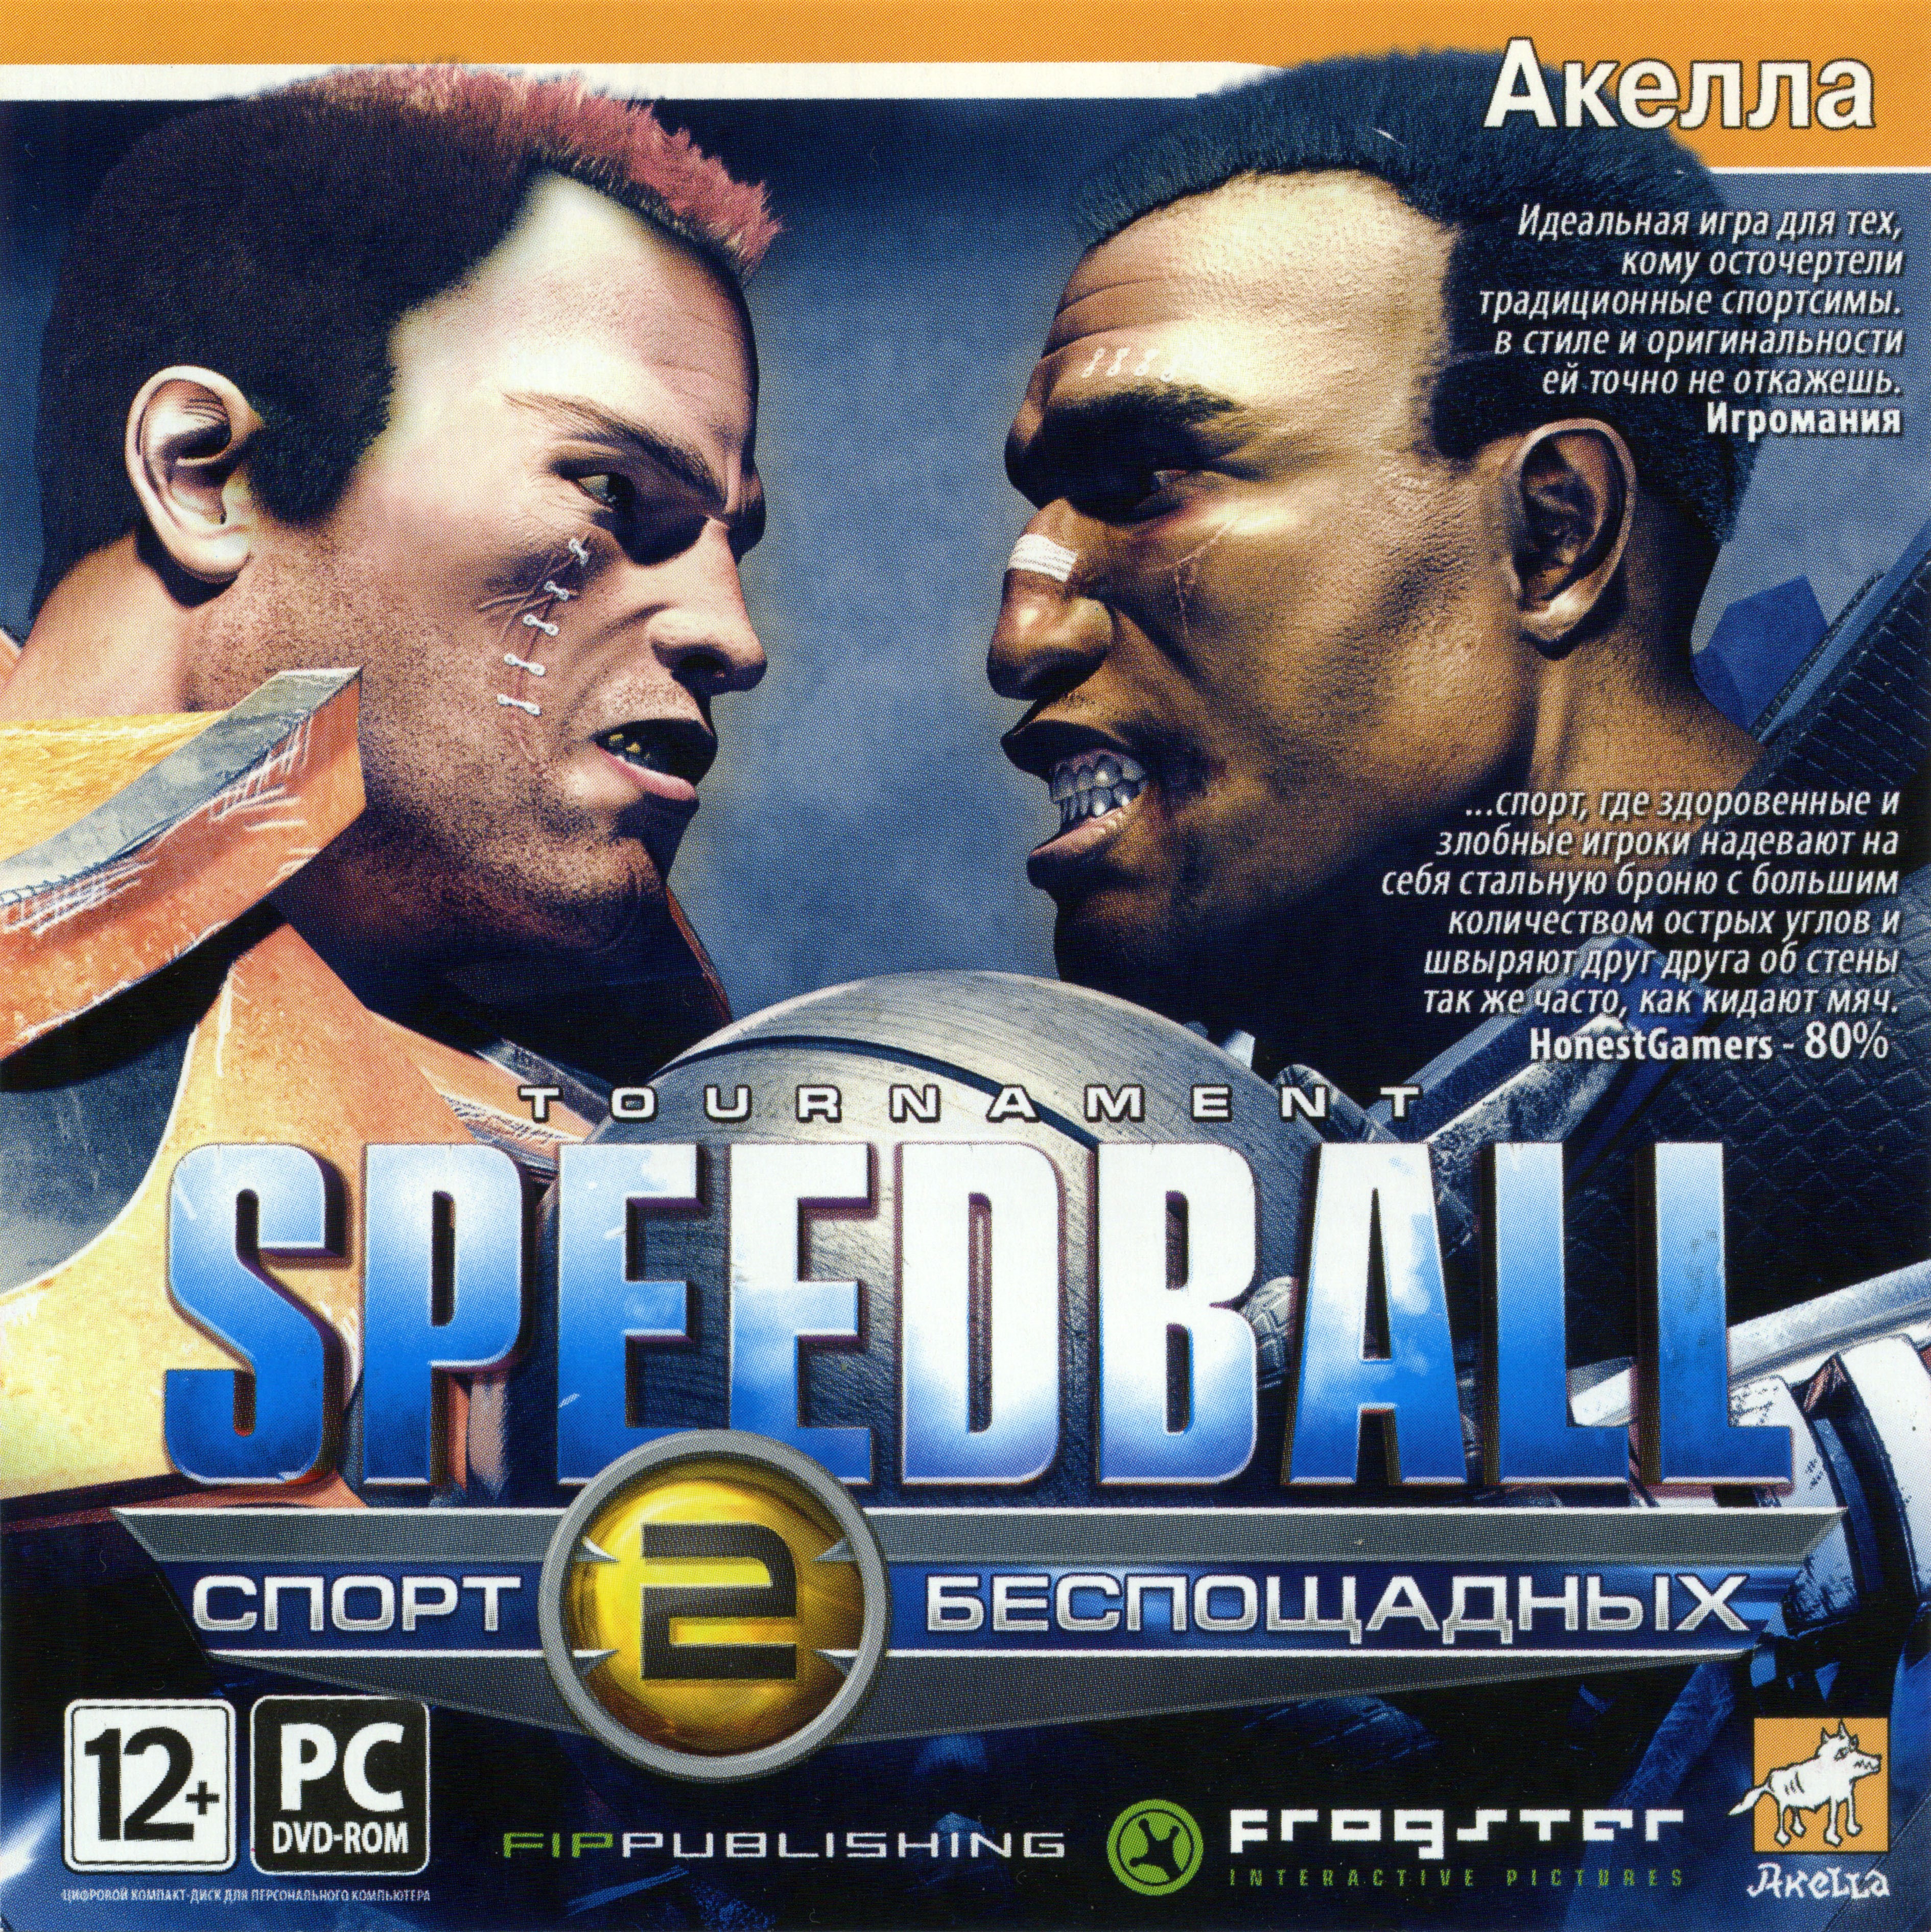 Speedball 2: Tournament Спорт беспощадных Steam RU+CIS